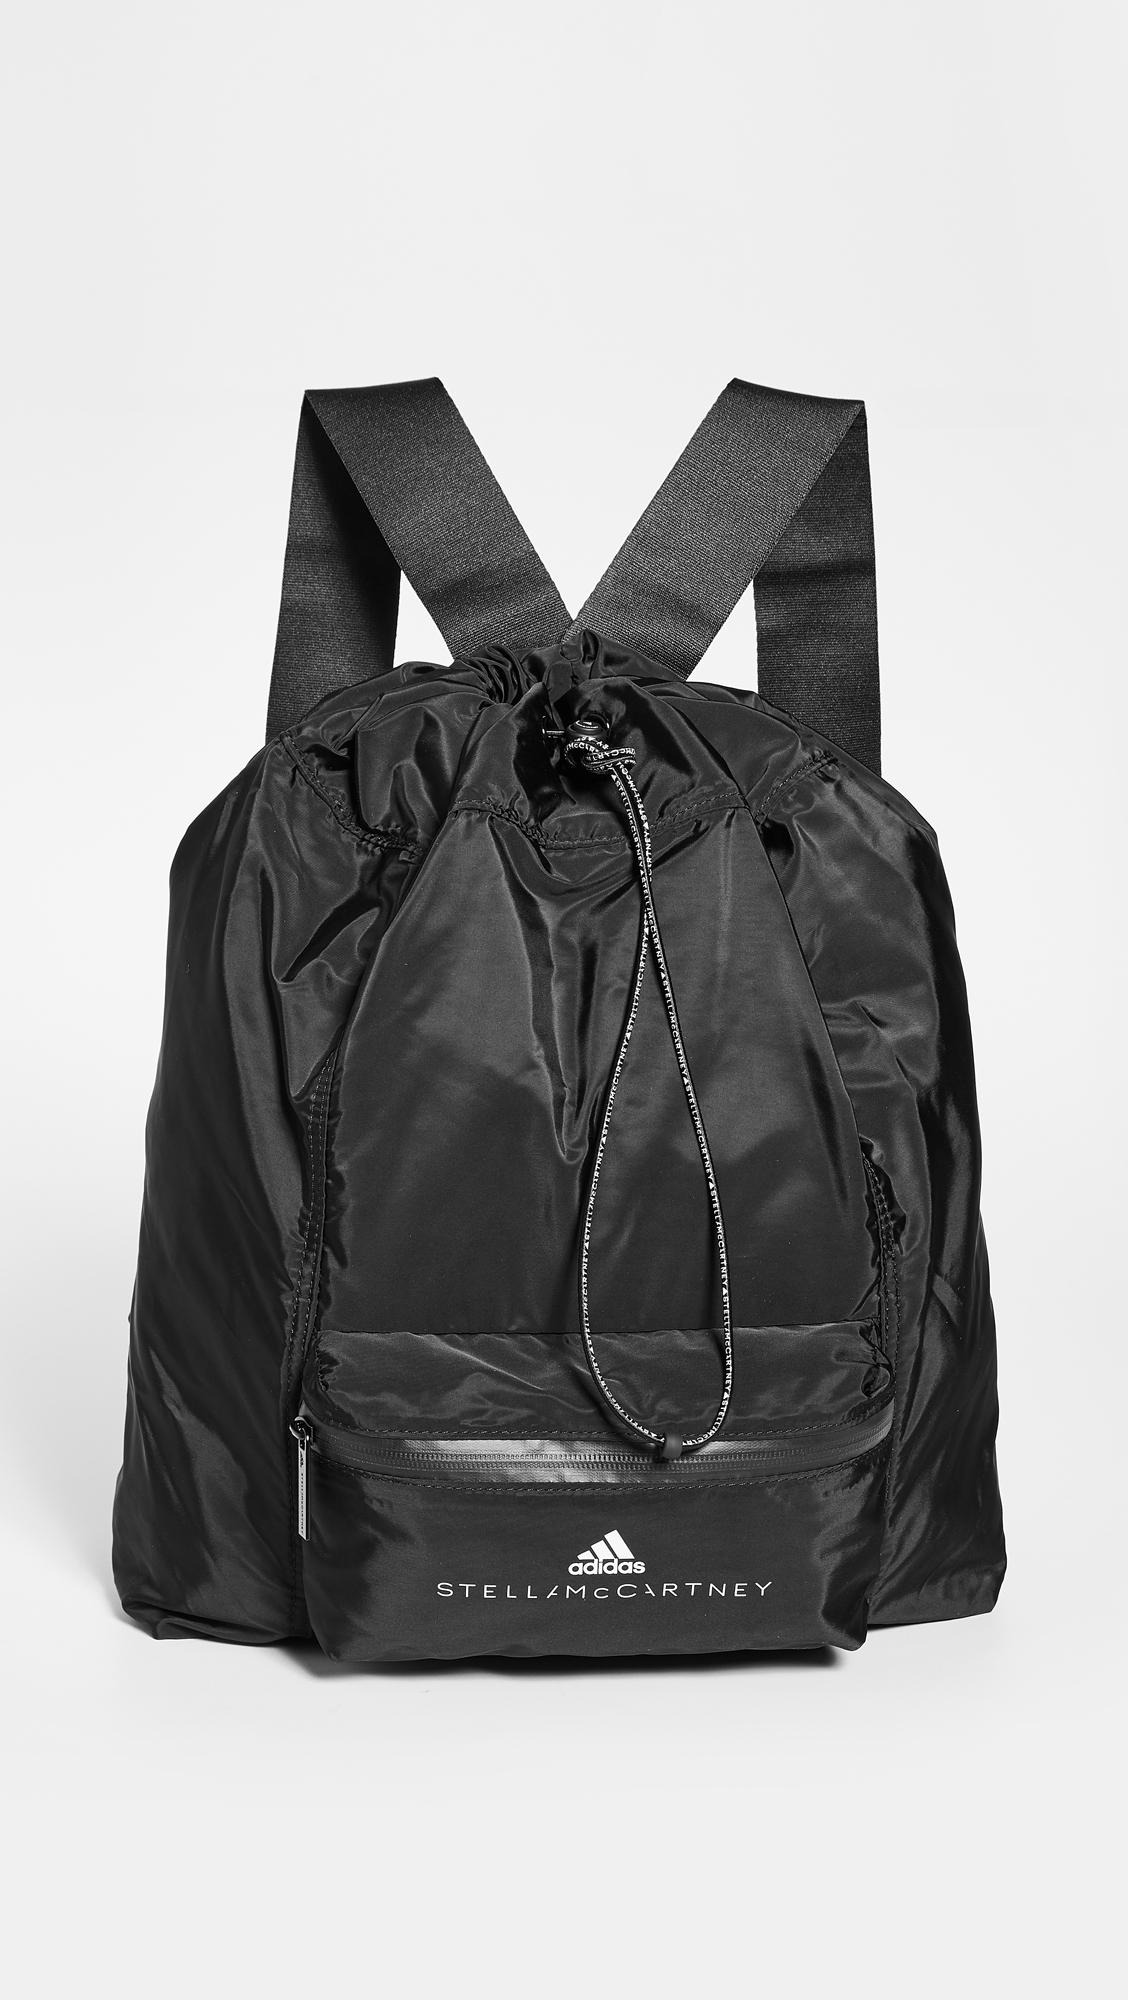 adidas By Stella McCartney Gymsack Backpack in Black | Lyst